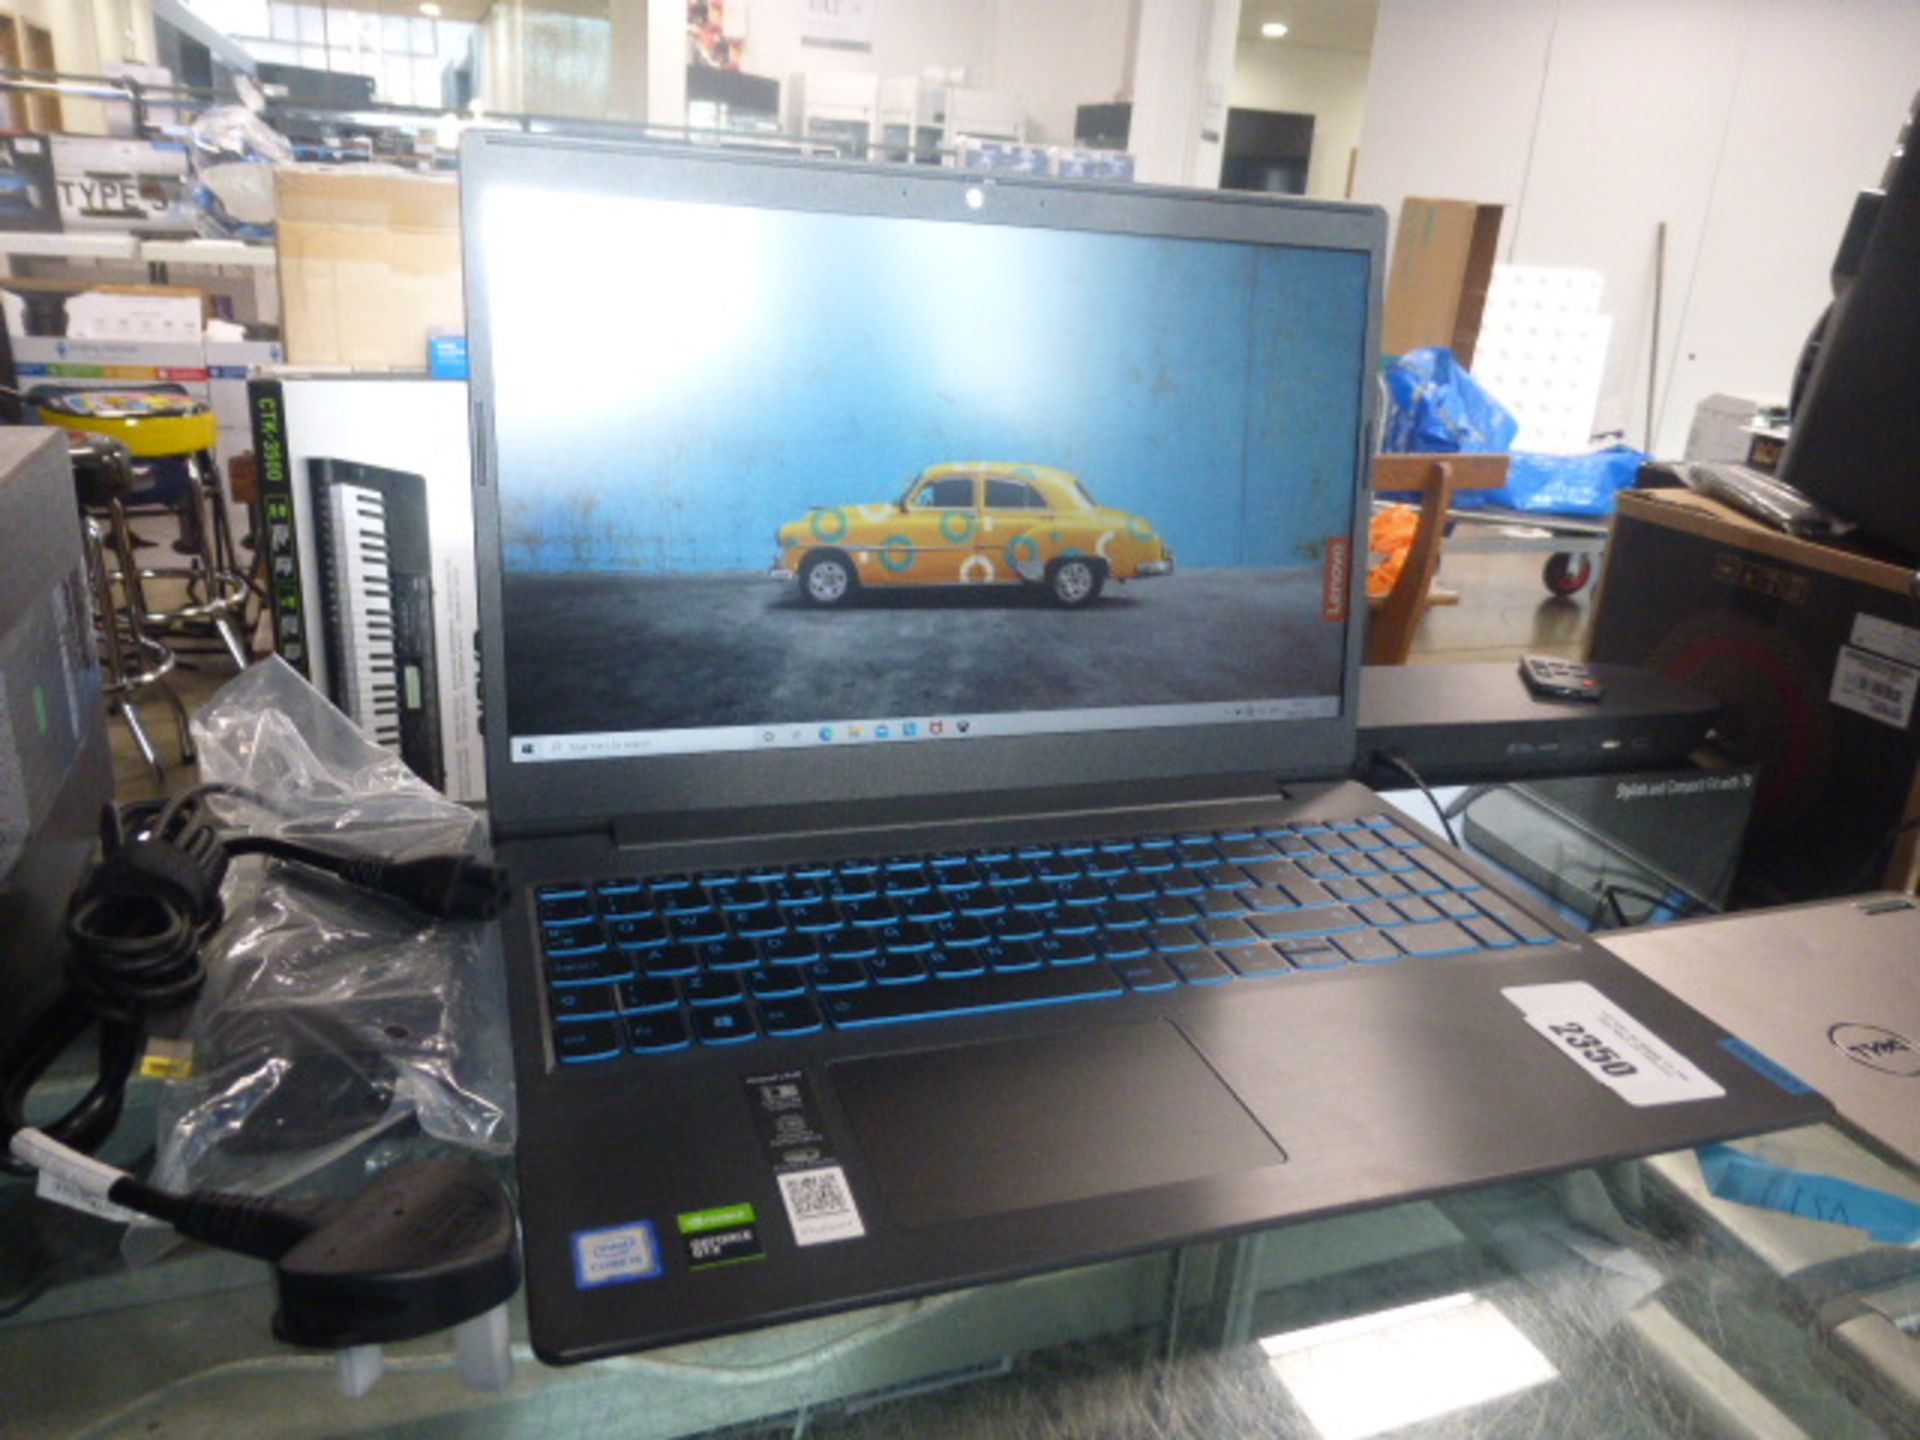 2274 Lenovo Ideapad L340 gaming laptop with Core i5 9th Gen., 8Gb RAM, 256Gb SSD, and psu (no box)